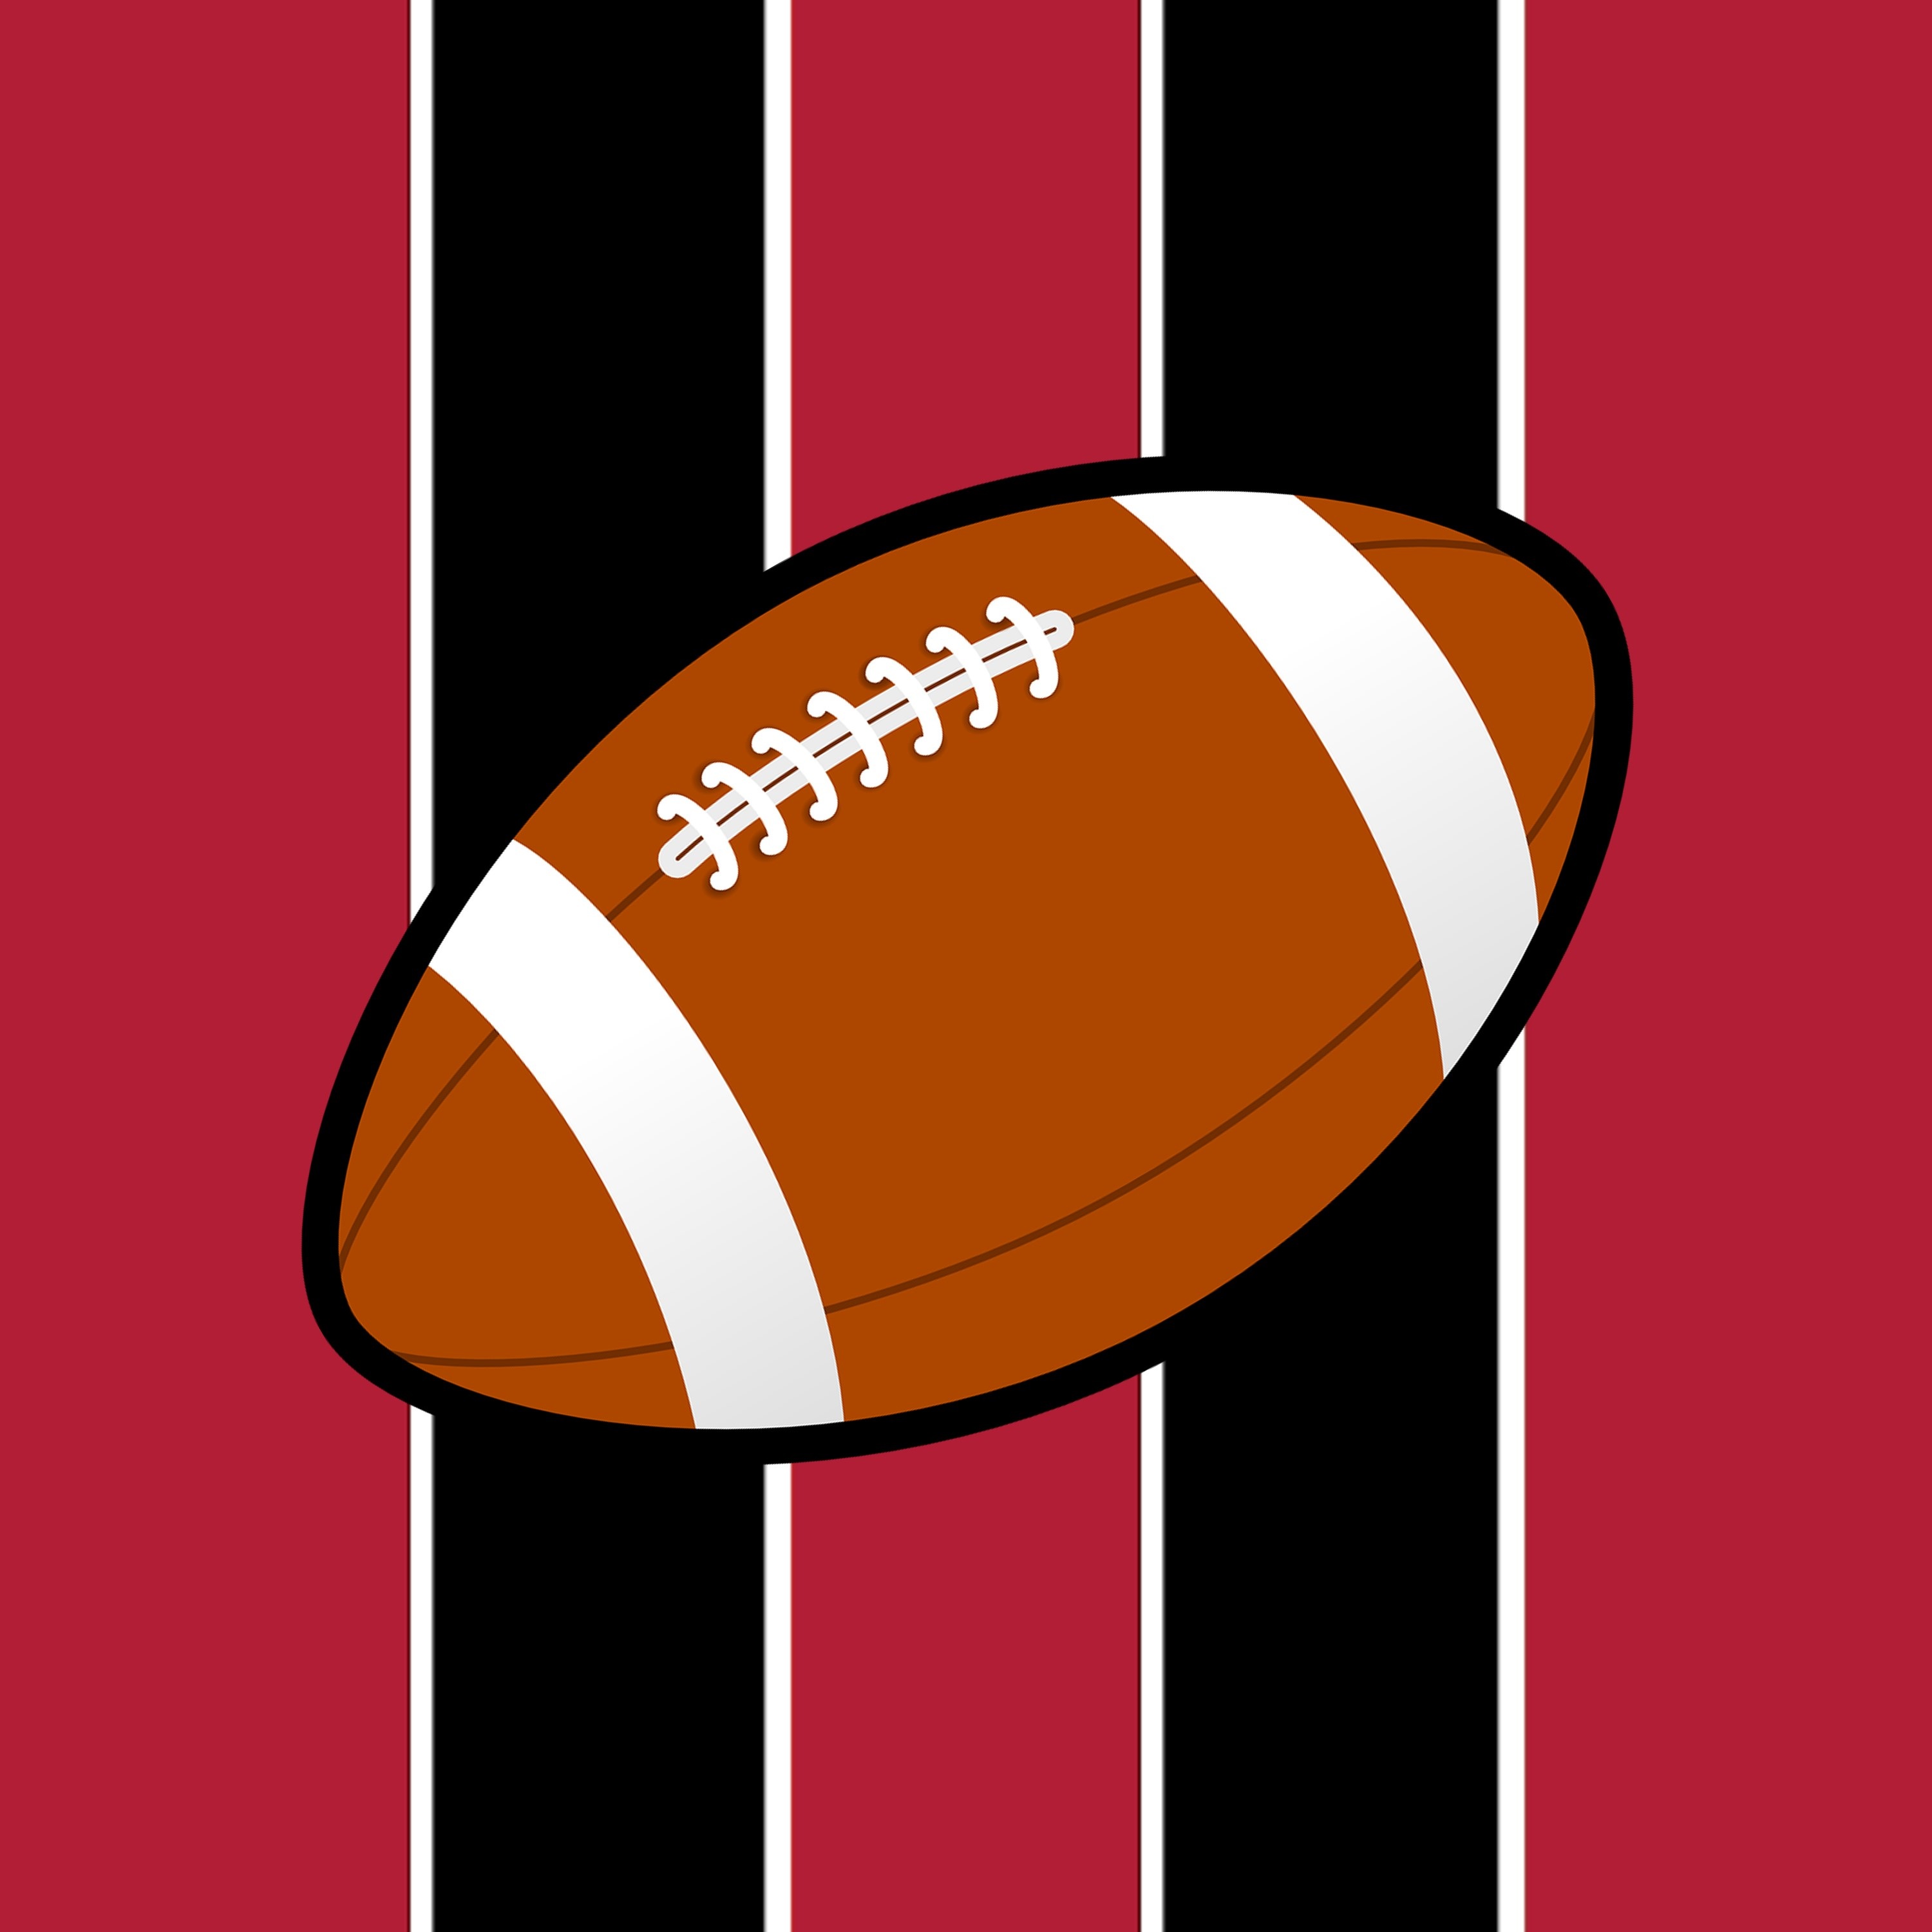 American football ball drawing free image download